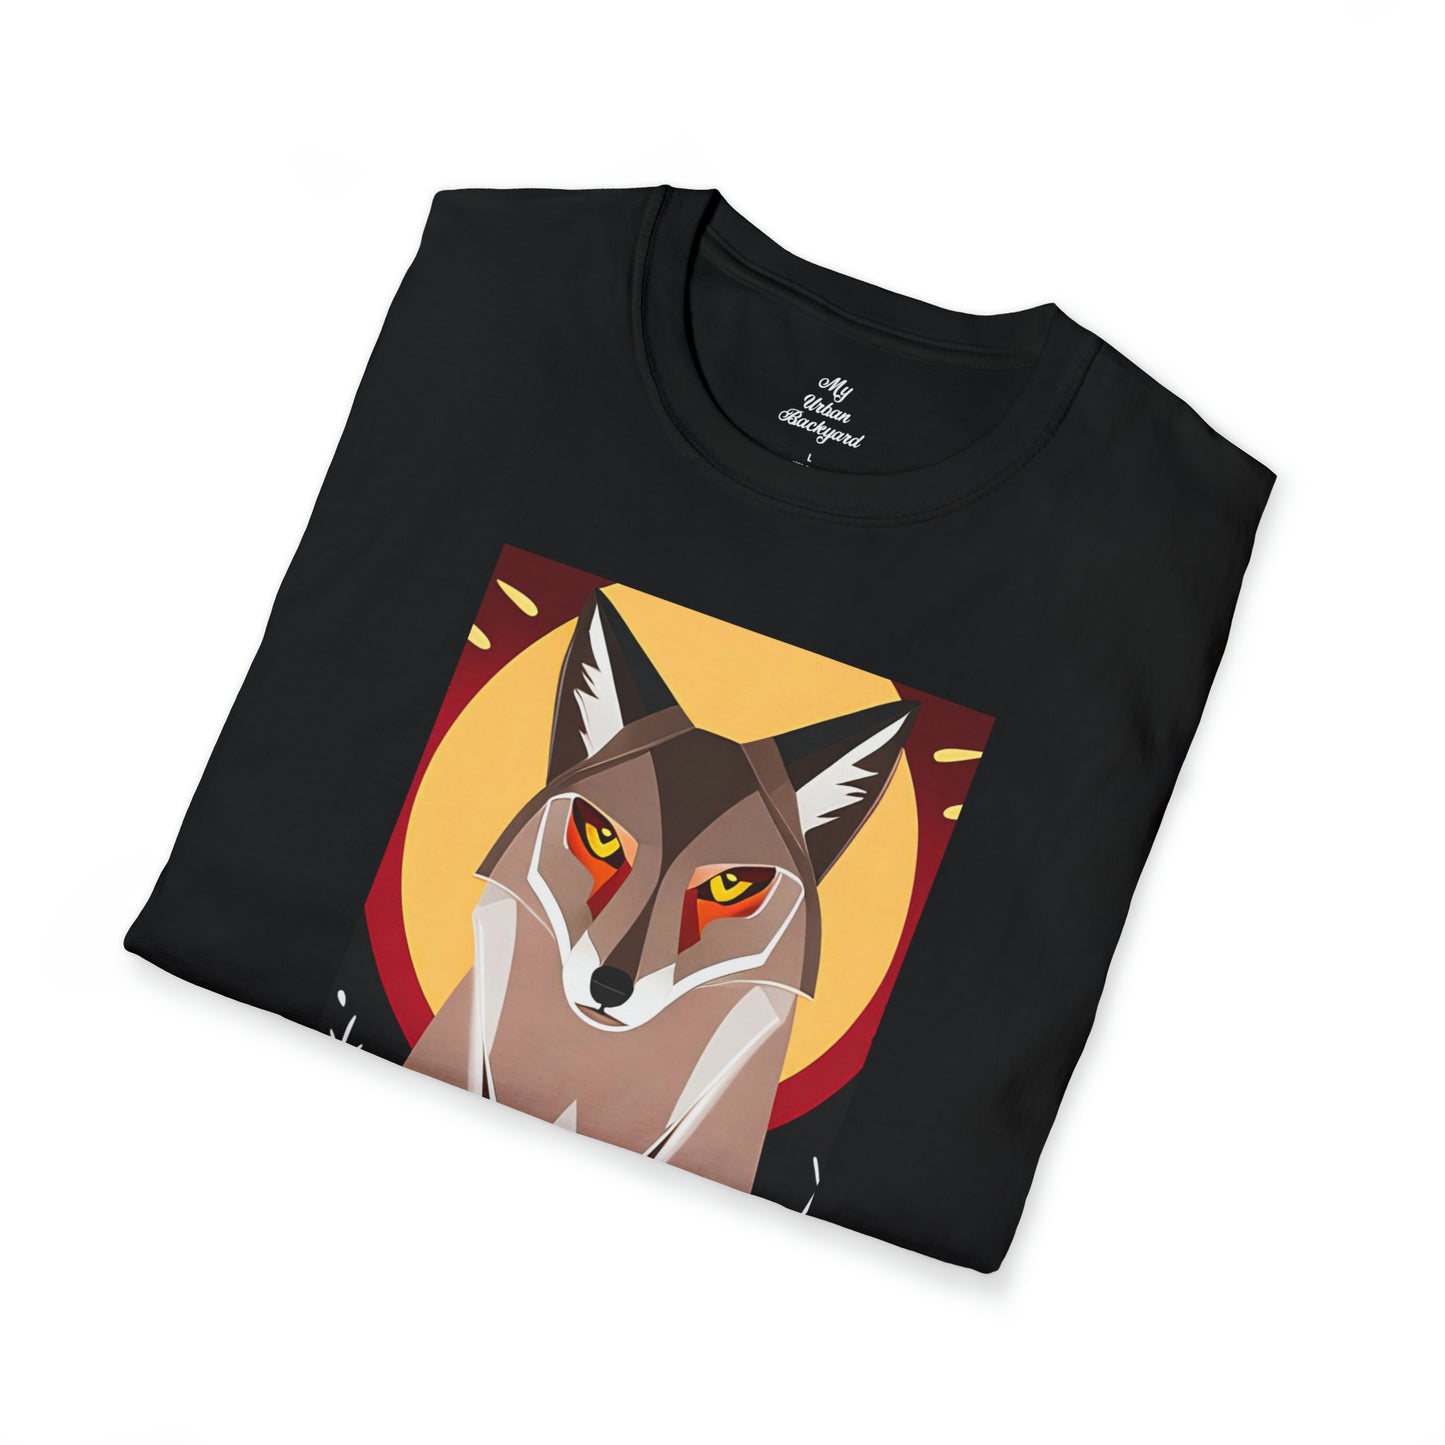 Sunset Coyote, Soft 100% Cotton T-Shirt, Unisex, Short Sleeve, Classic Fit